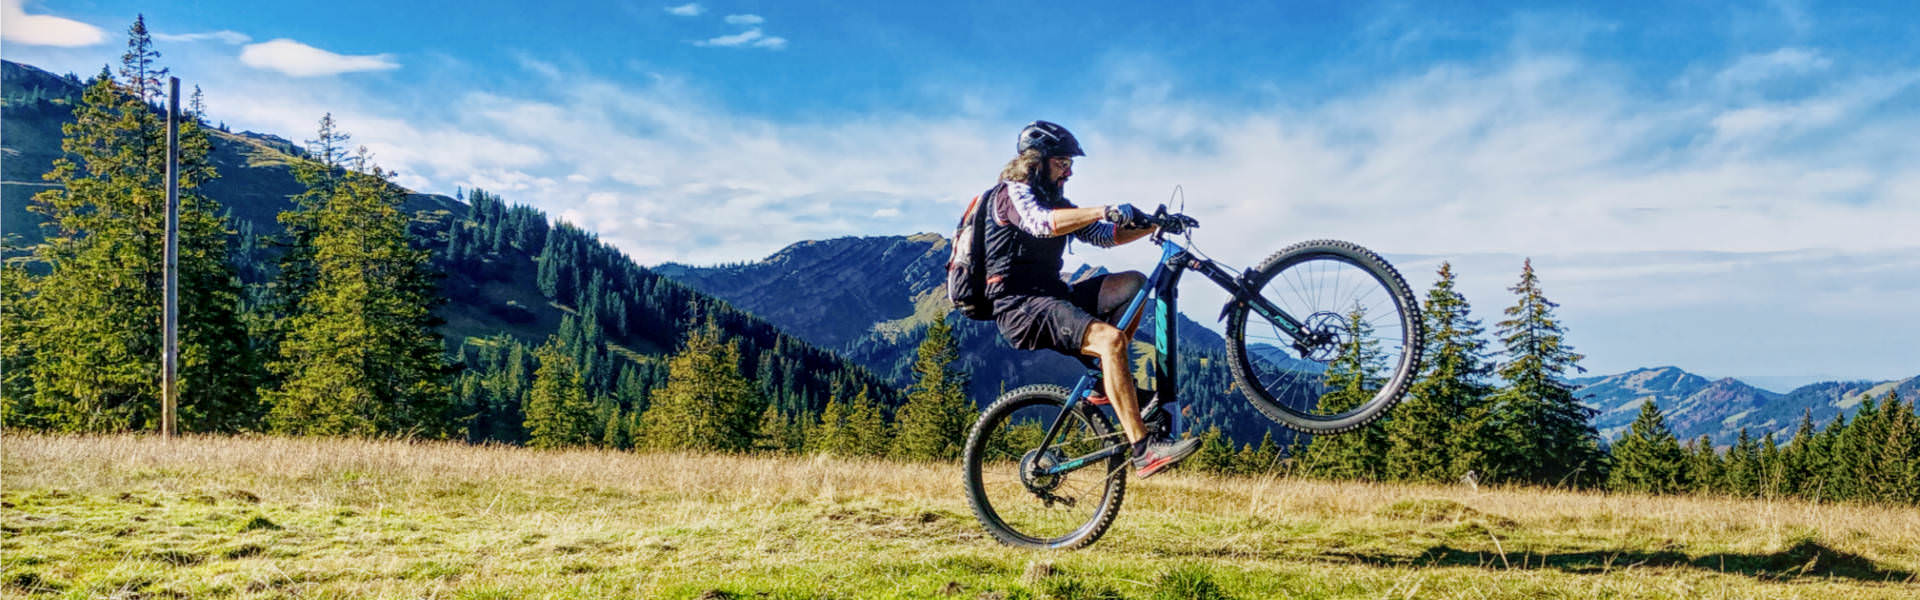 E-MTB Verleih im Allgäu und E-Mountainbike Verleih in Verbindung mit einem E-Mountainbike oder E-Bike Fahrtechnik Training